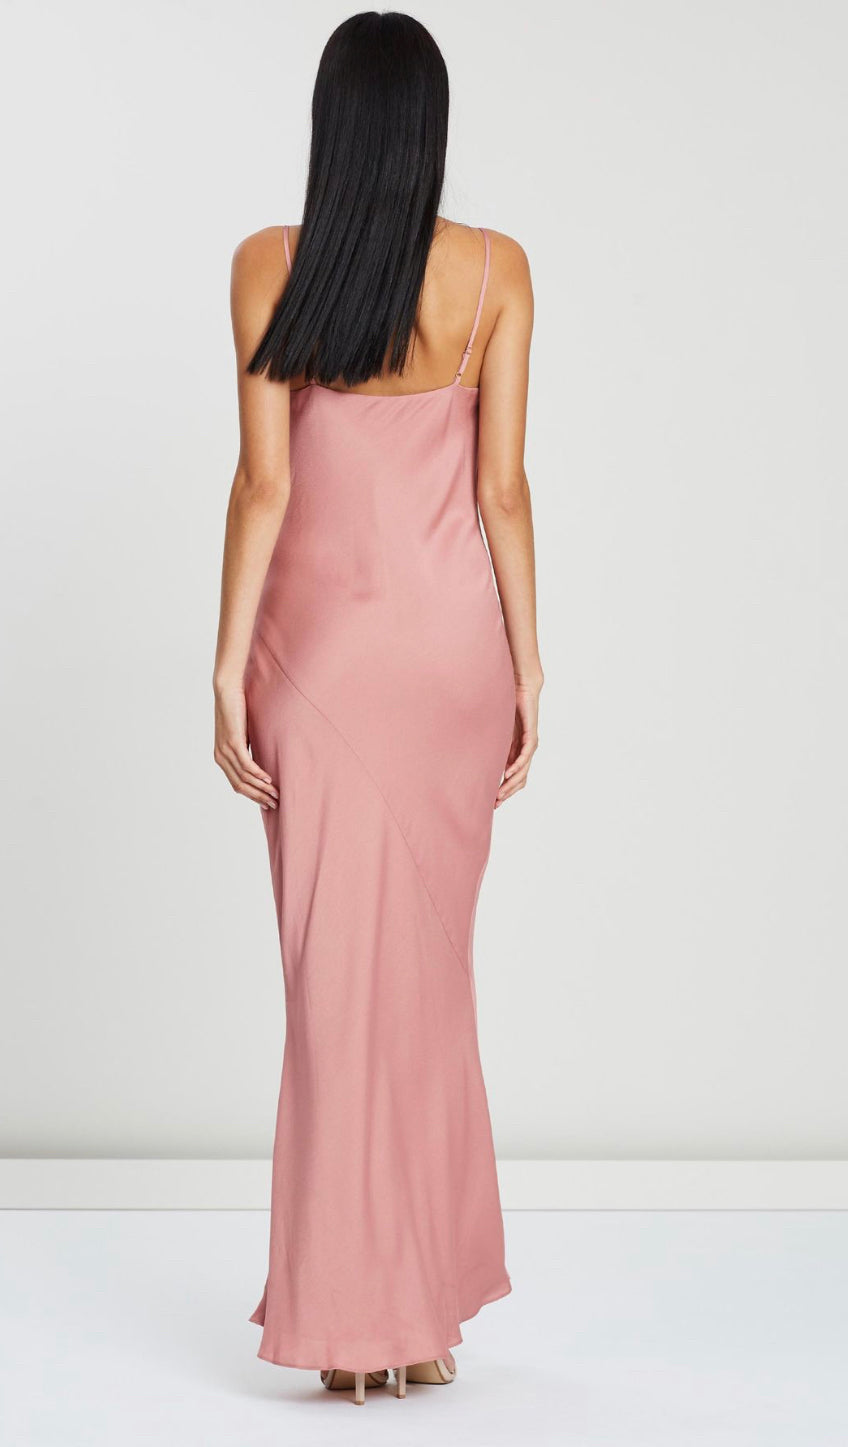 Shona Joy Luxe Bias Slips Dress maxi in rose pink. Back view